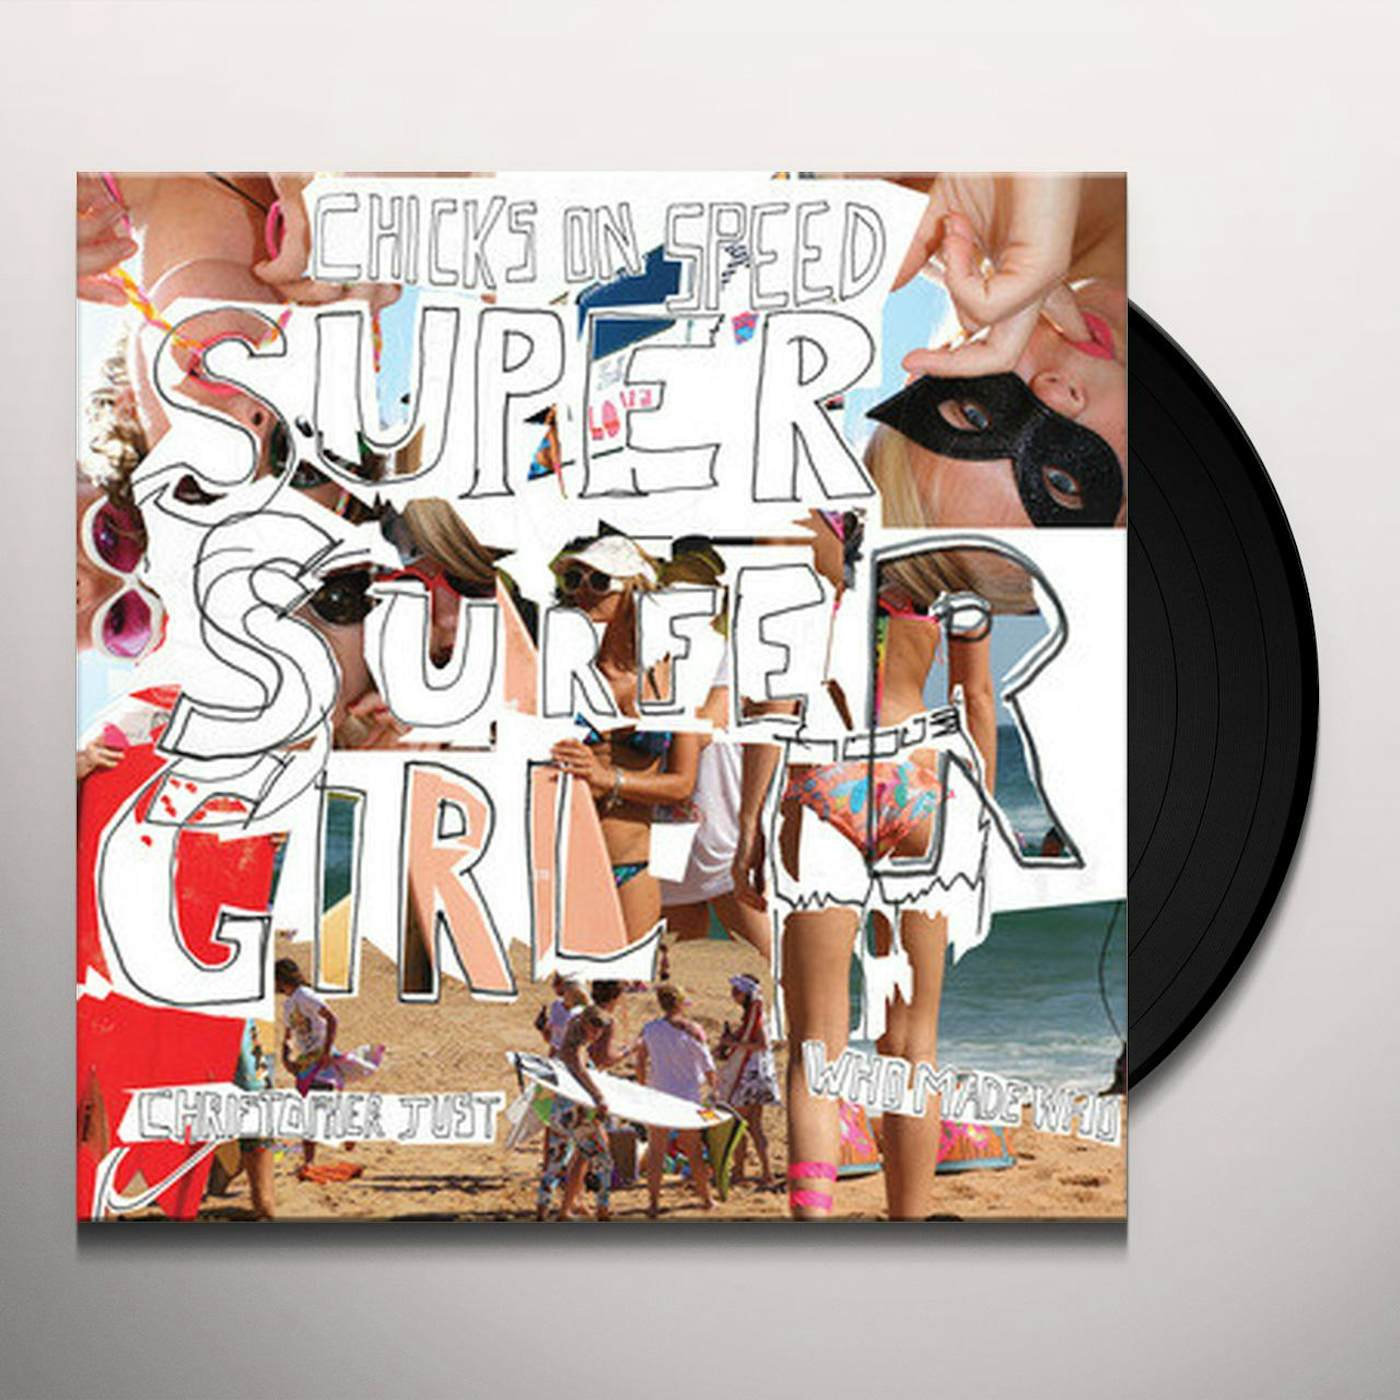 Chicks On Speed Super Surfer Girl Vinyl Record